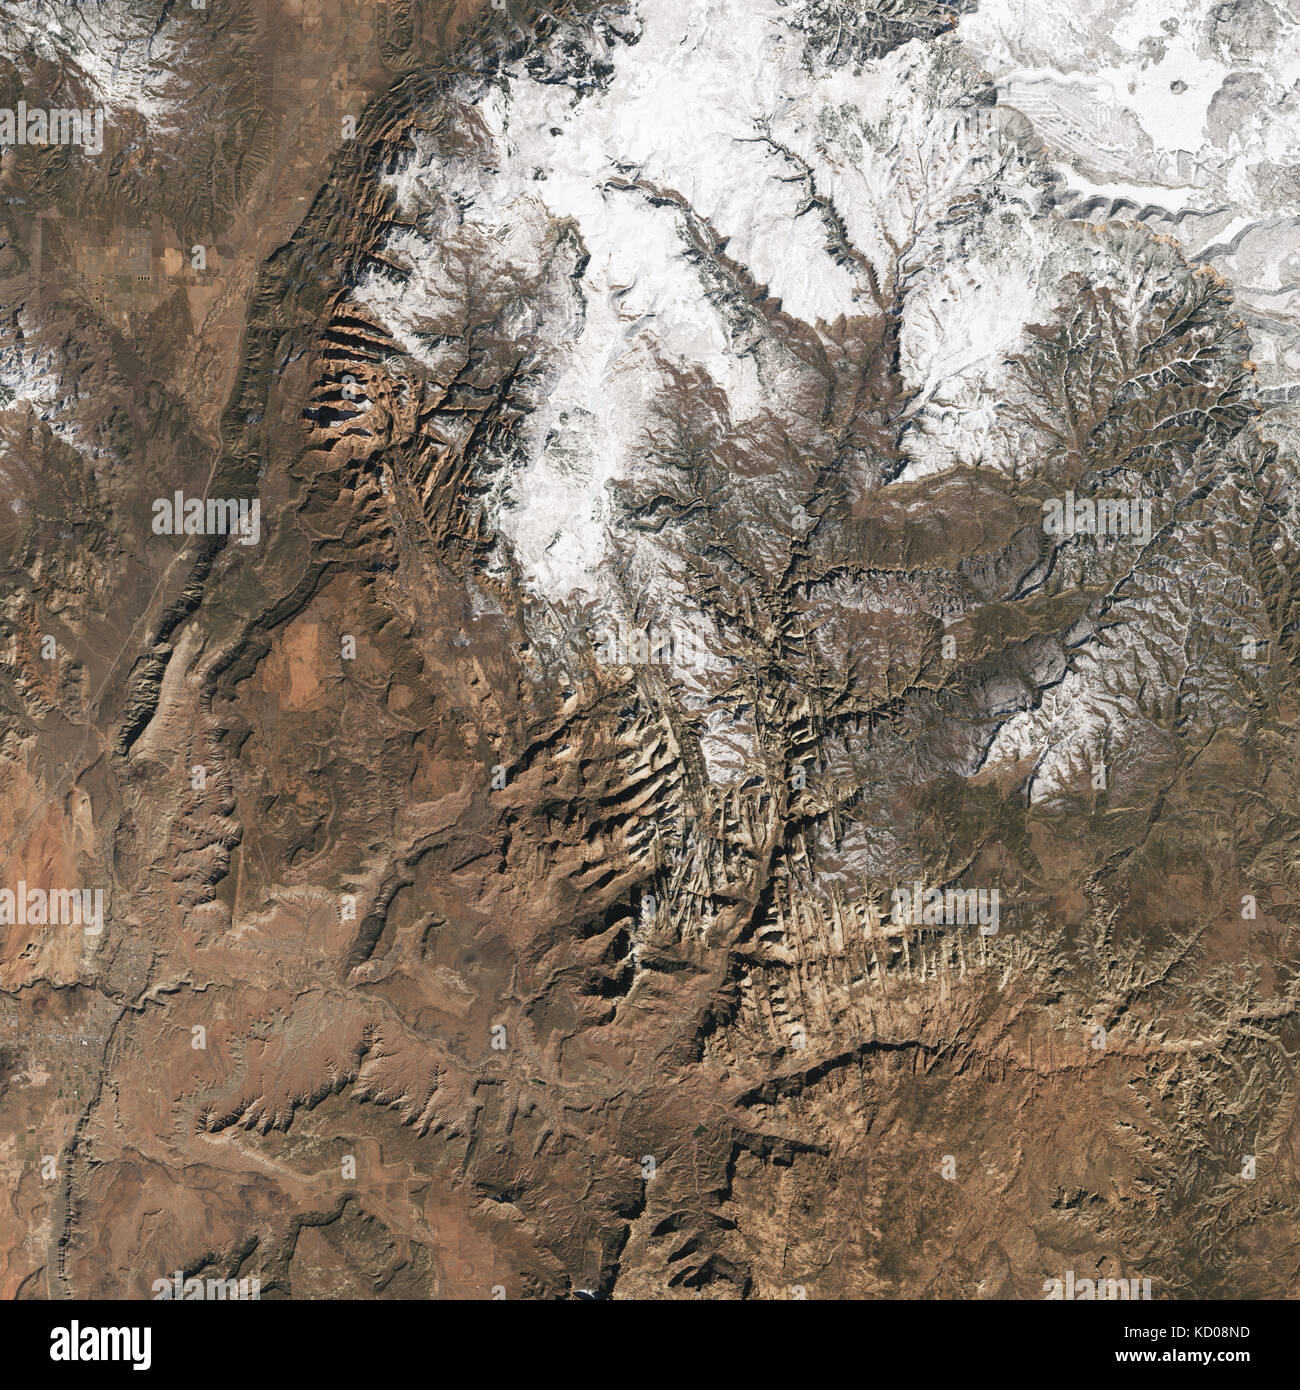 Satellite image of Zion National Park in winter, Utah, USA. Stock Photo